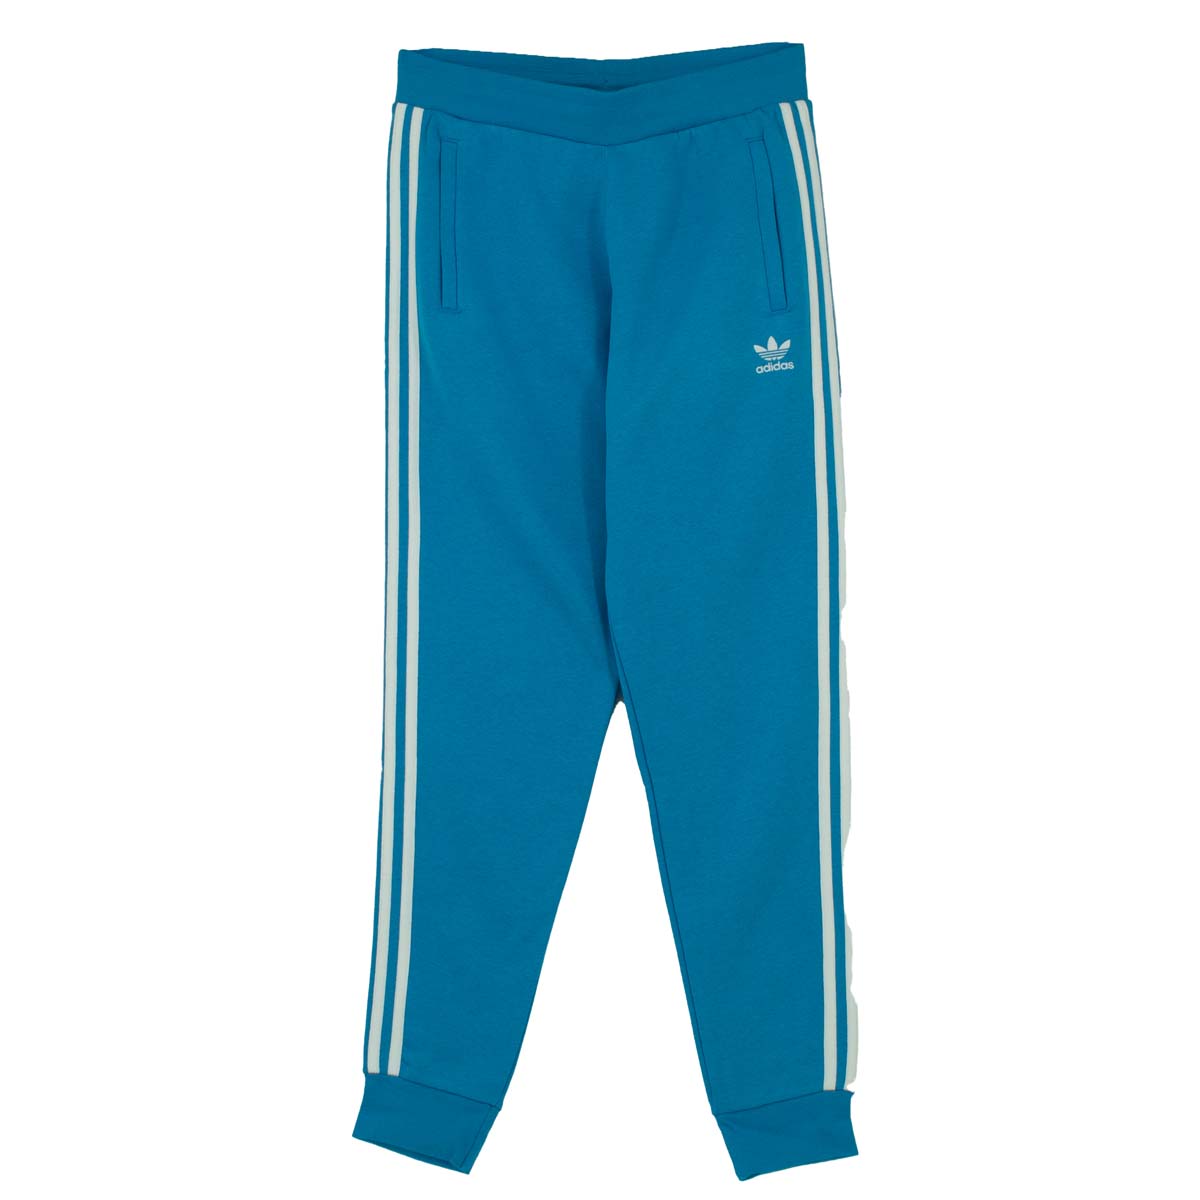 Adidas Originals 3-Stripes Pant Herren Trainingshose DZ4637 M